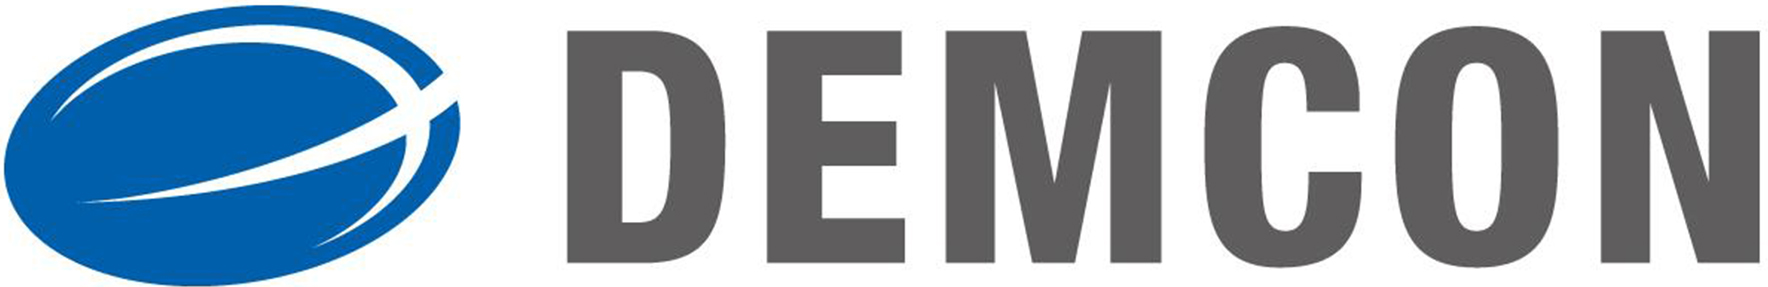 Demcon logo Metalfinish Group